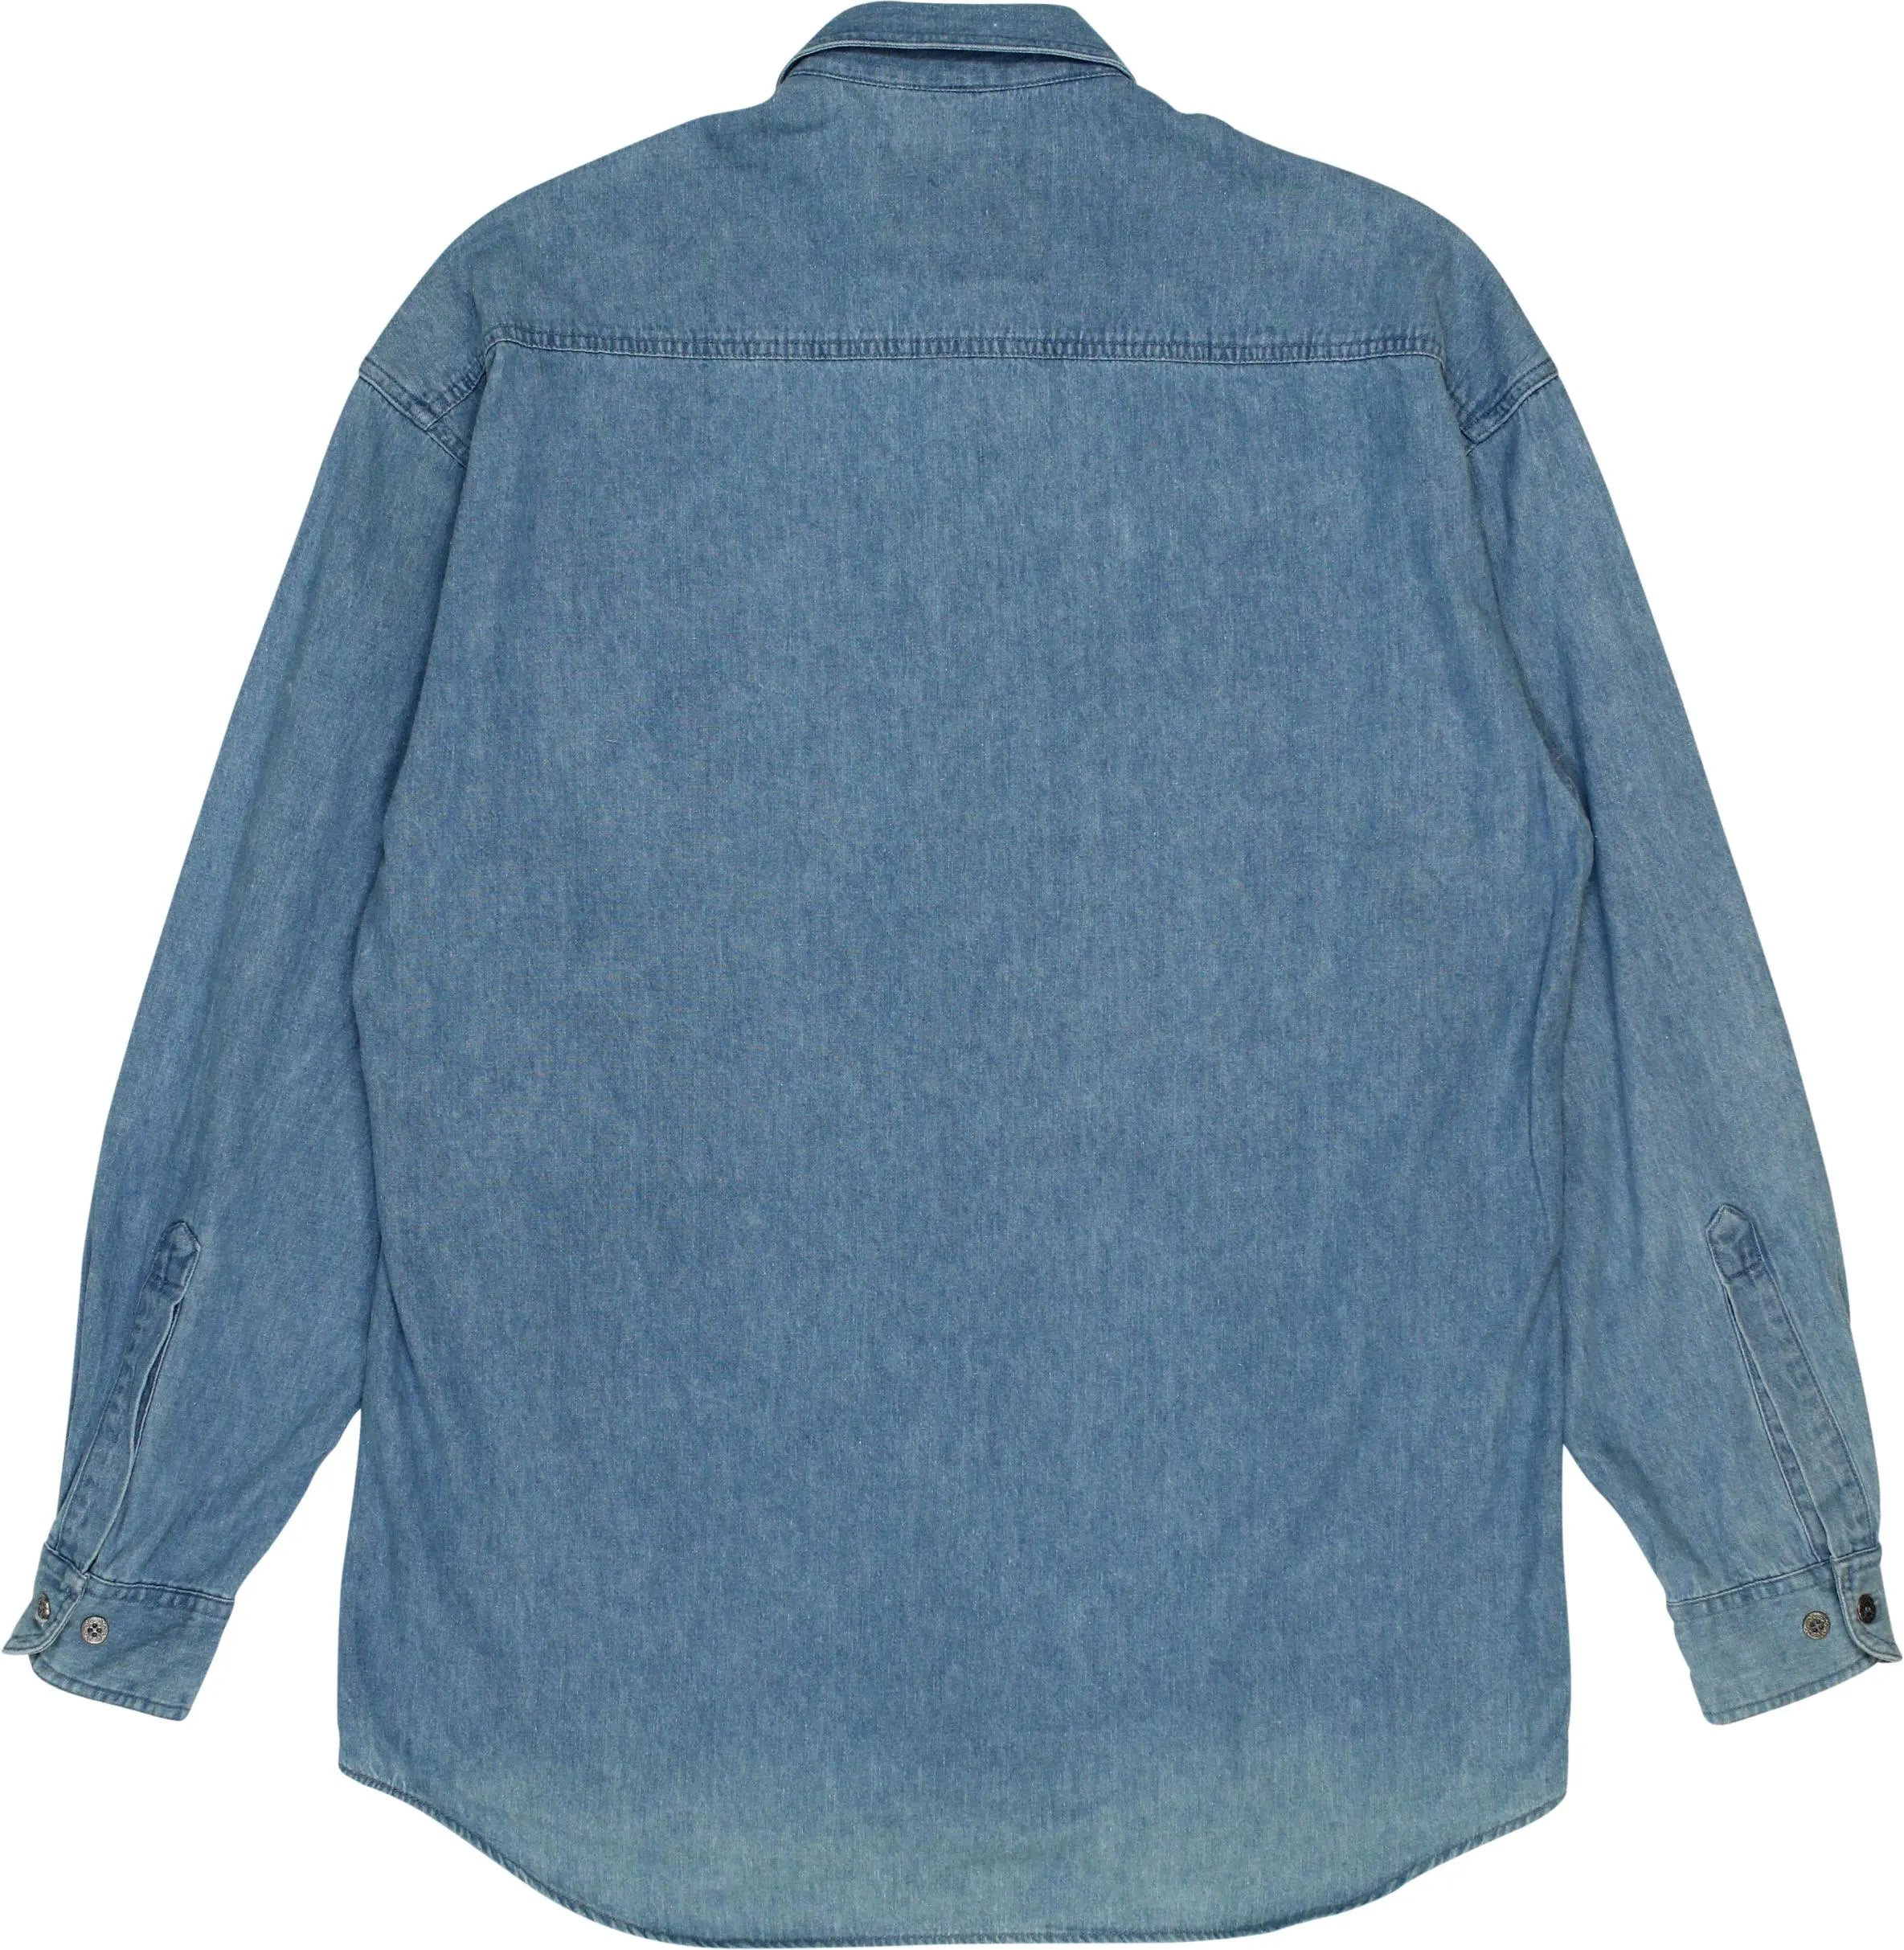 McKay - Vintage Denim Shirt- ThriftTale.com - Vintage and second handclothing